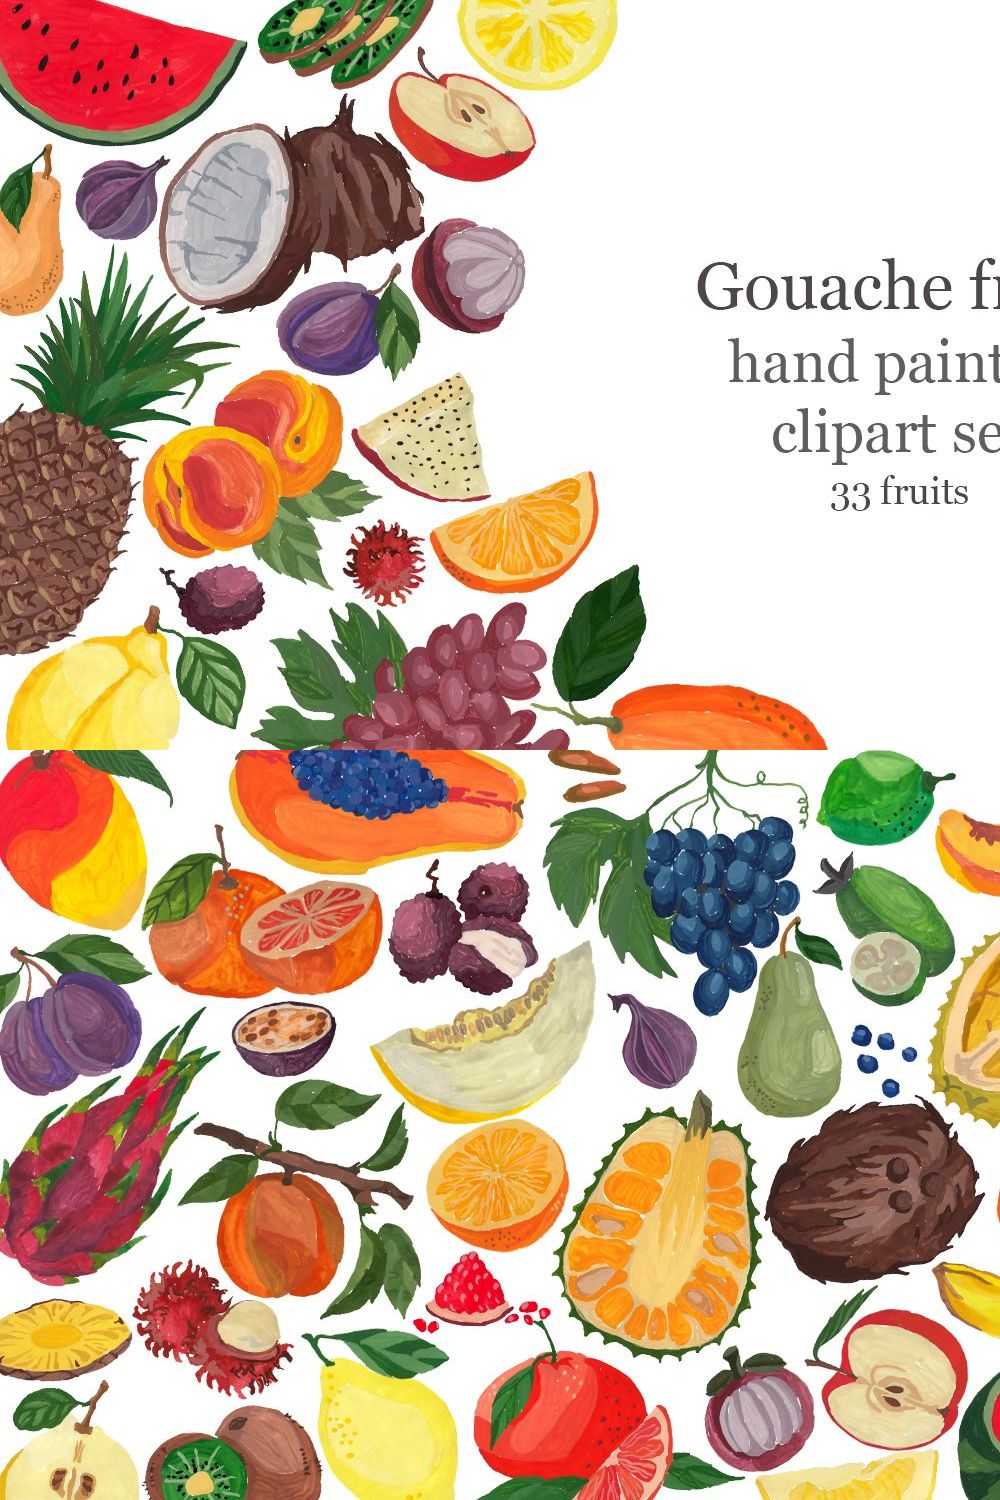 Fruit set, hand-painted, gouache pinterest preview image.